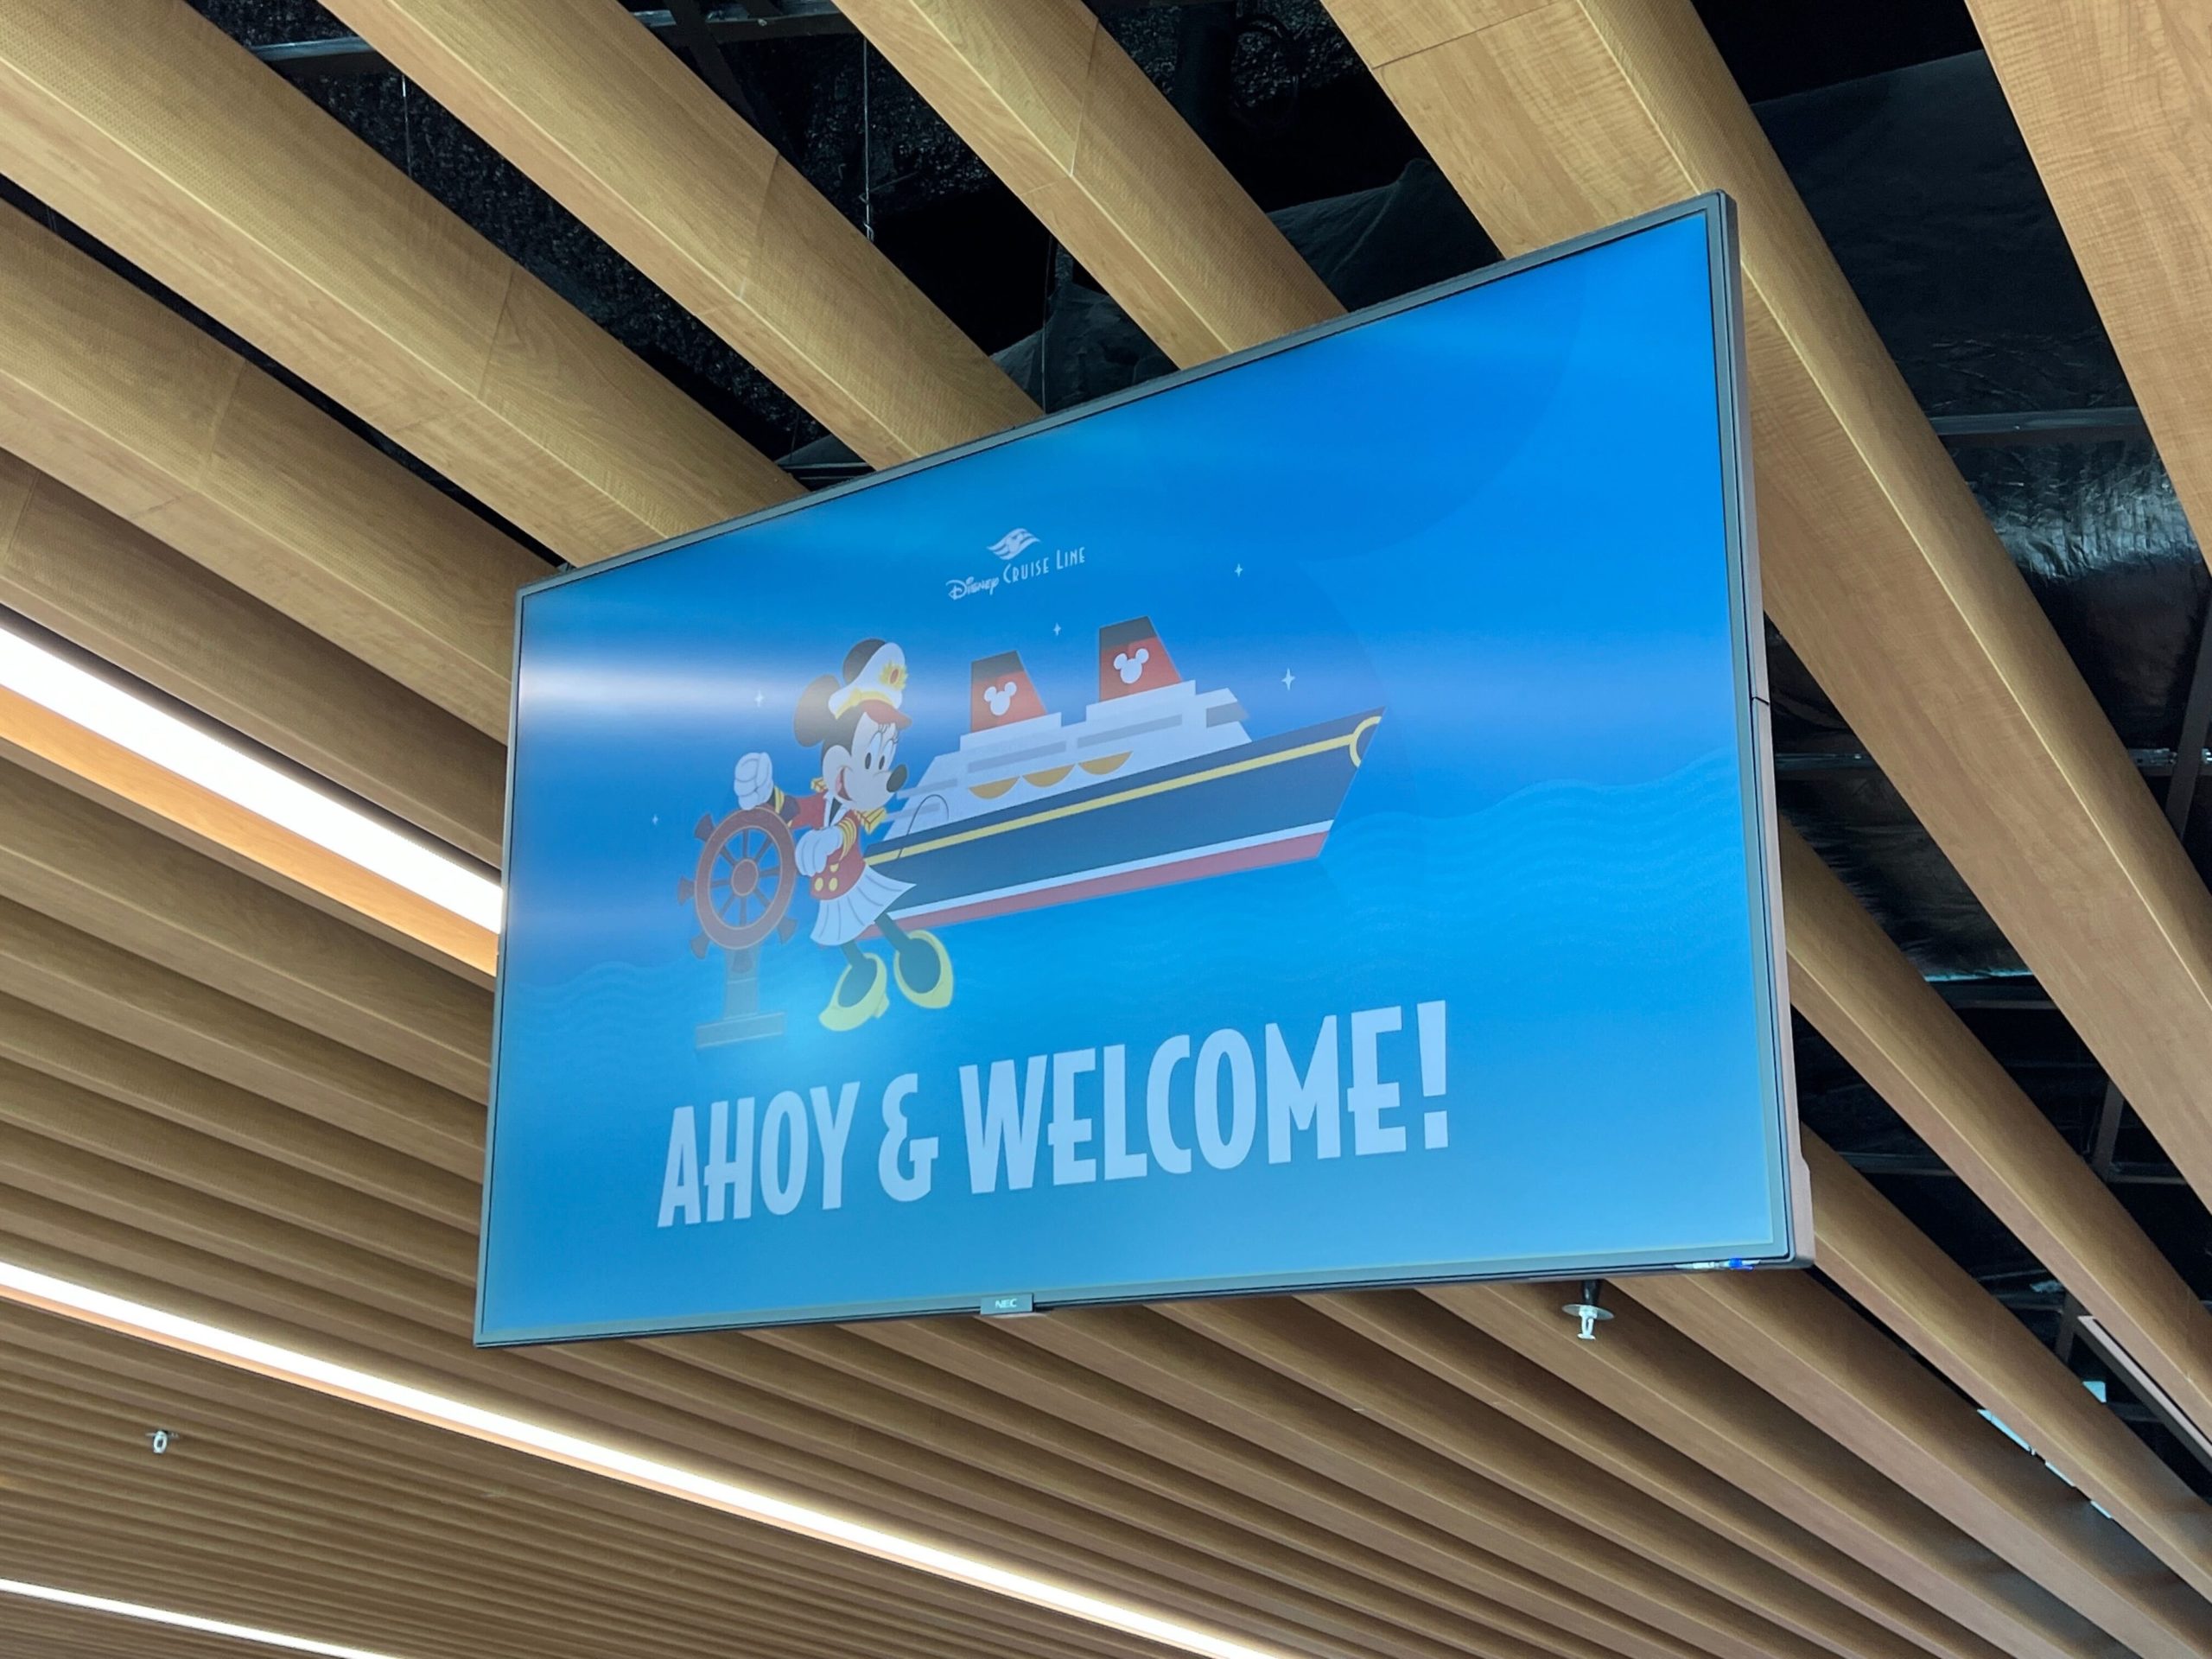 Disney Cruise Line Embarkation